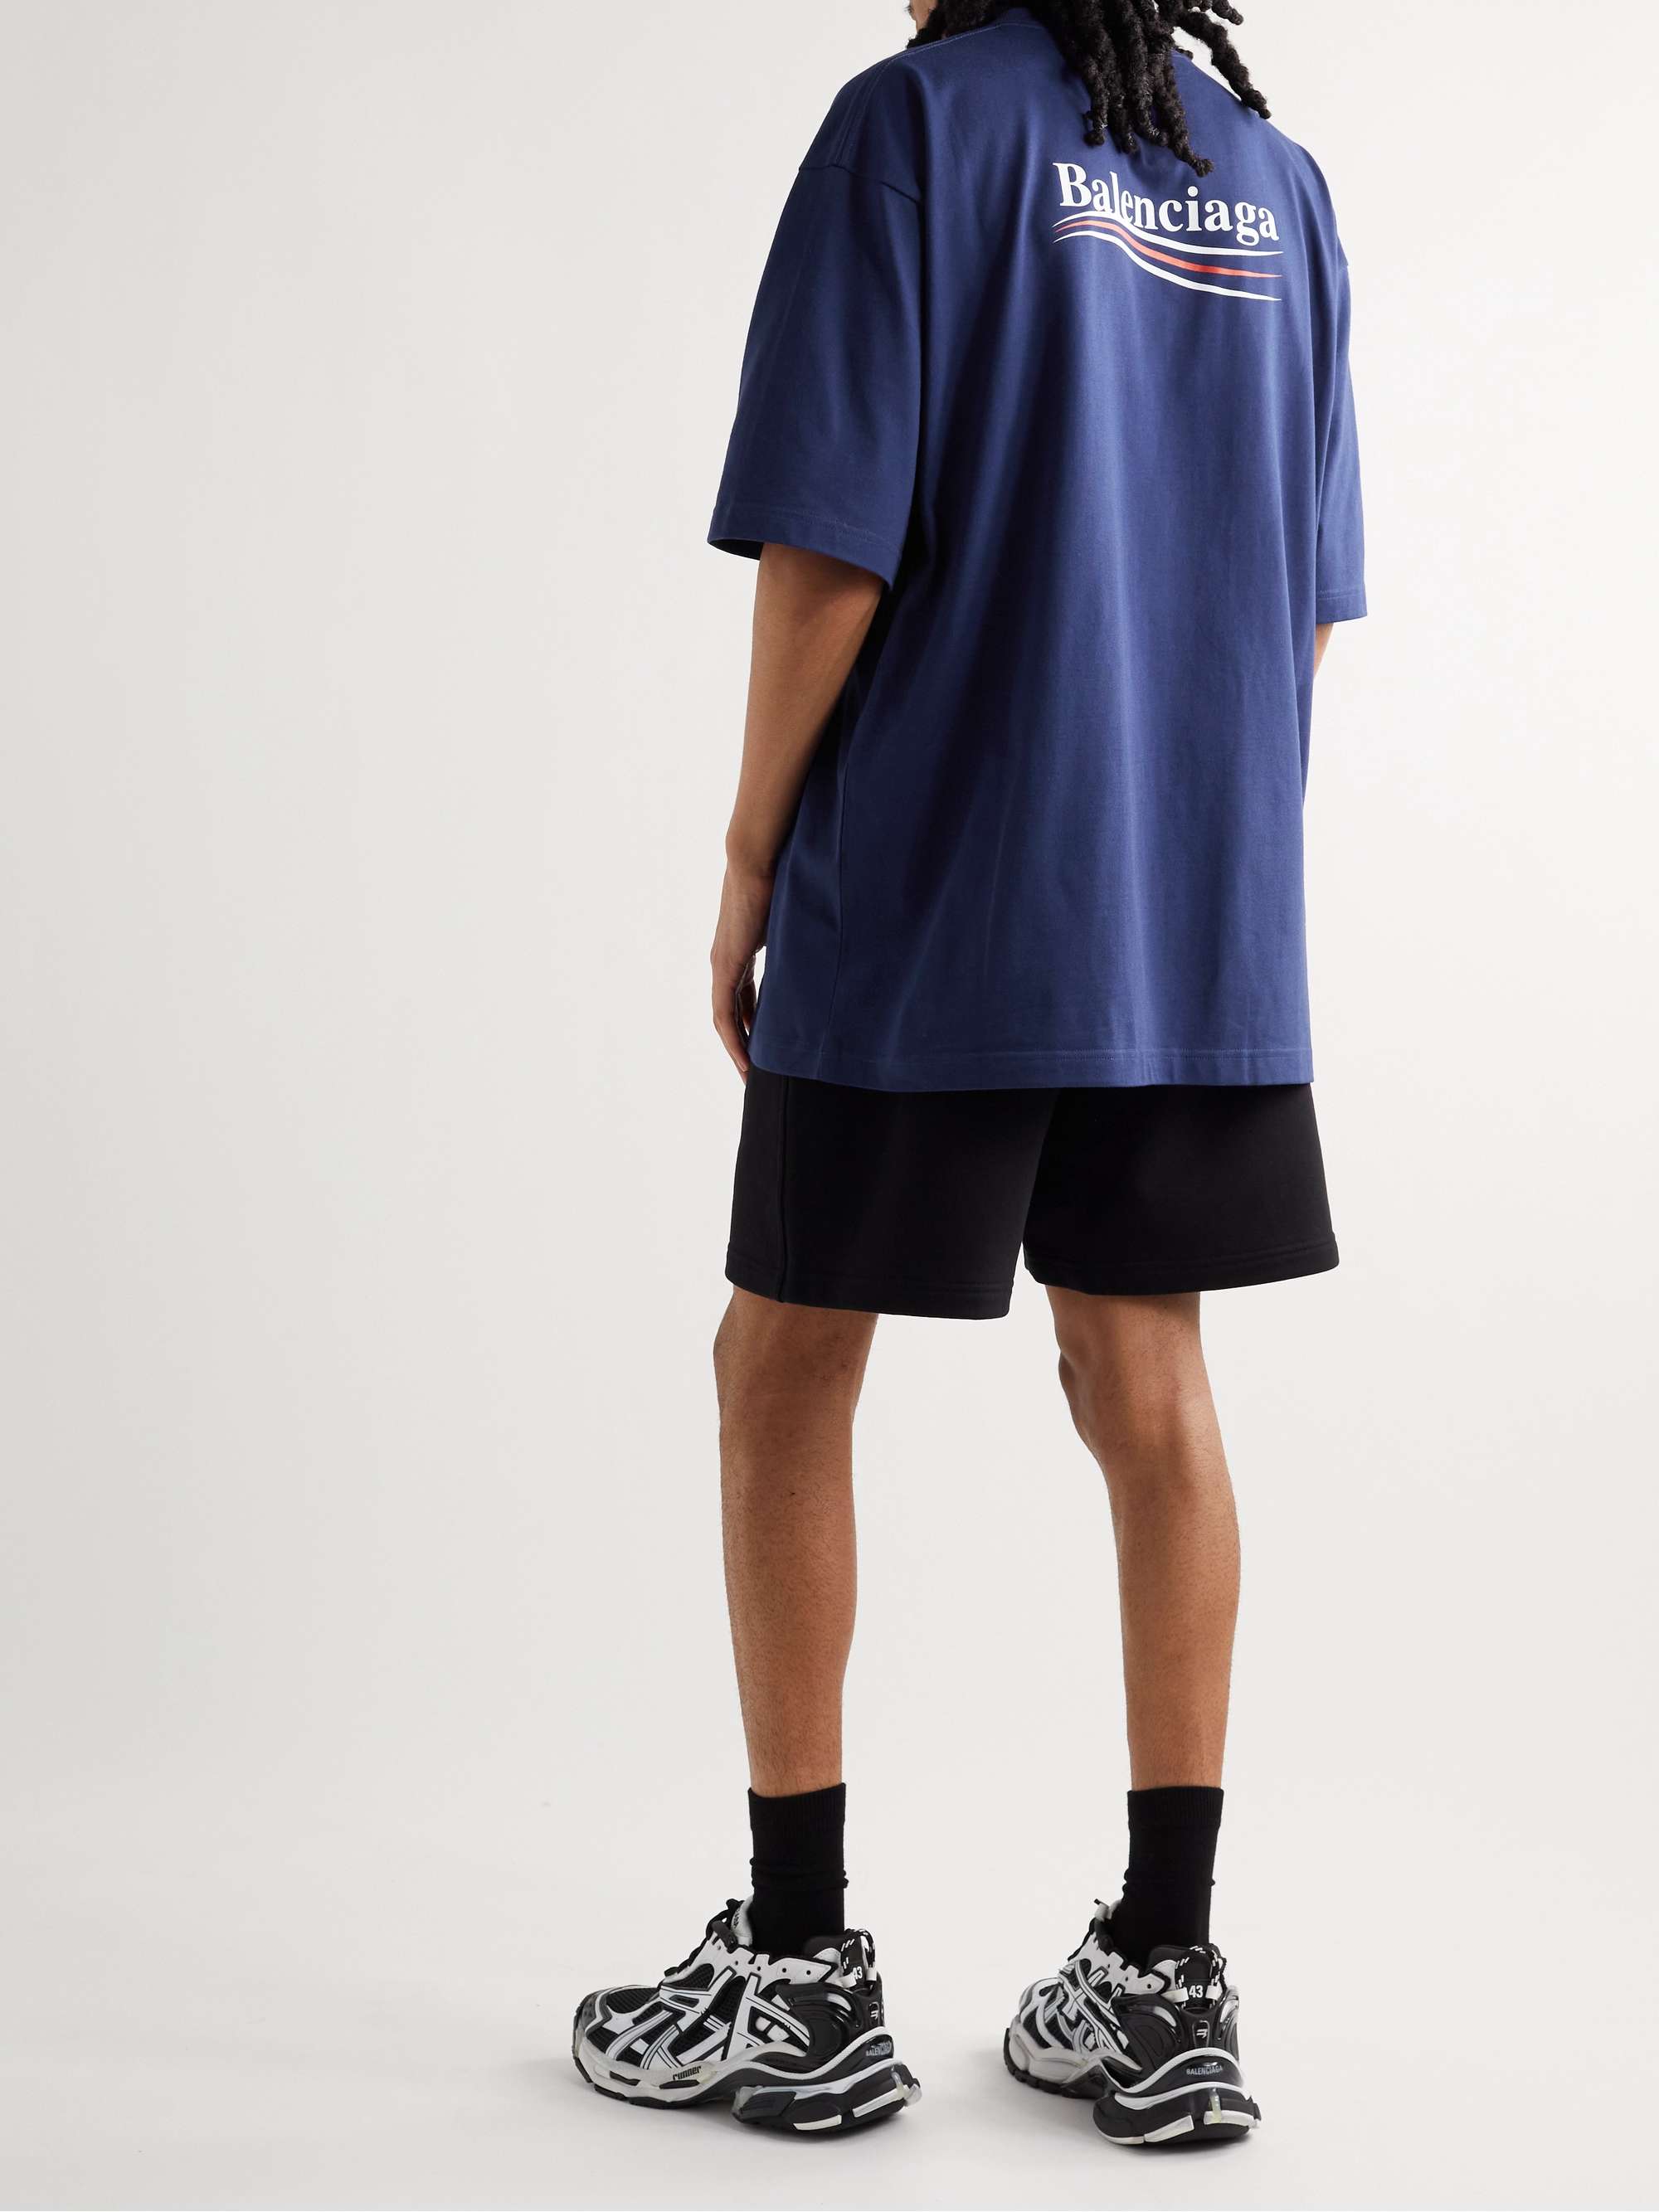 BALENCIAGA Oversized Logo-Print Cotton-Jersey T-Shirt for Men | MR PORTER